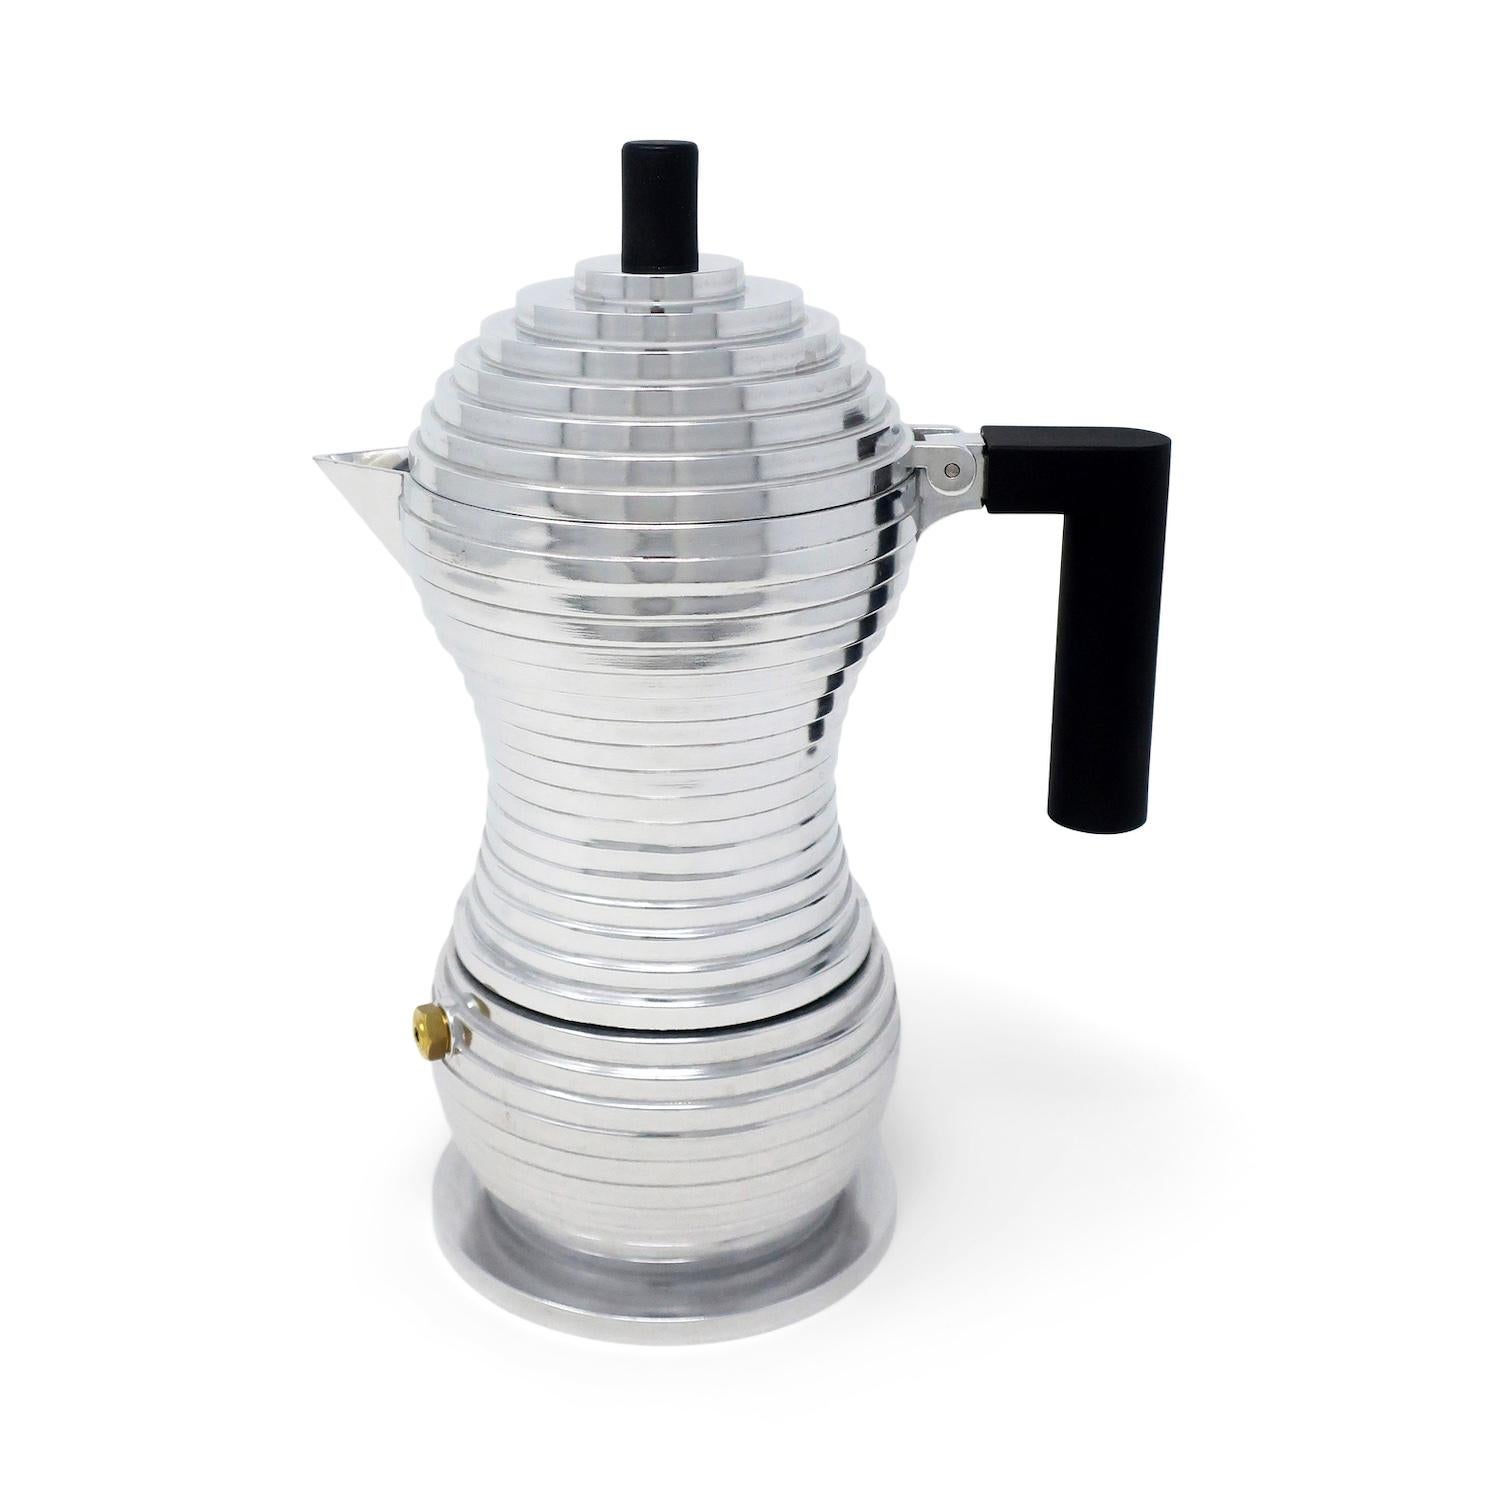 Designed by Michele de Lucchi for Alessi in 2015, the Pulcina stovetop espresso maker is a 